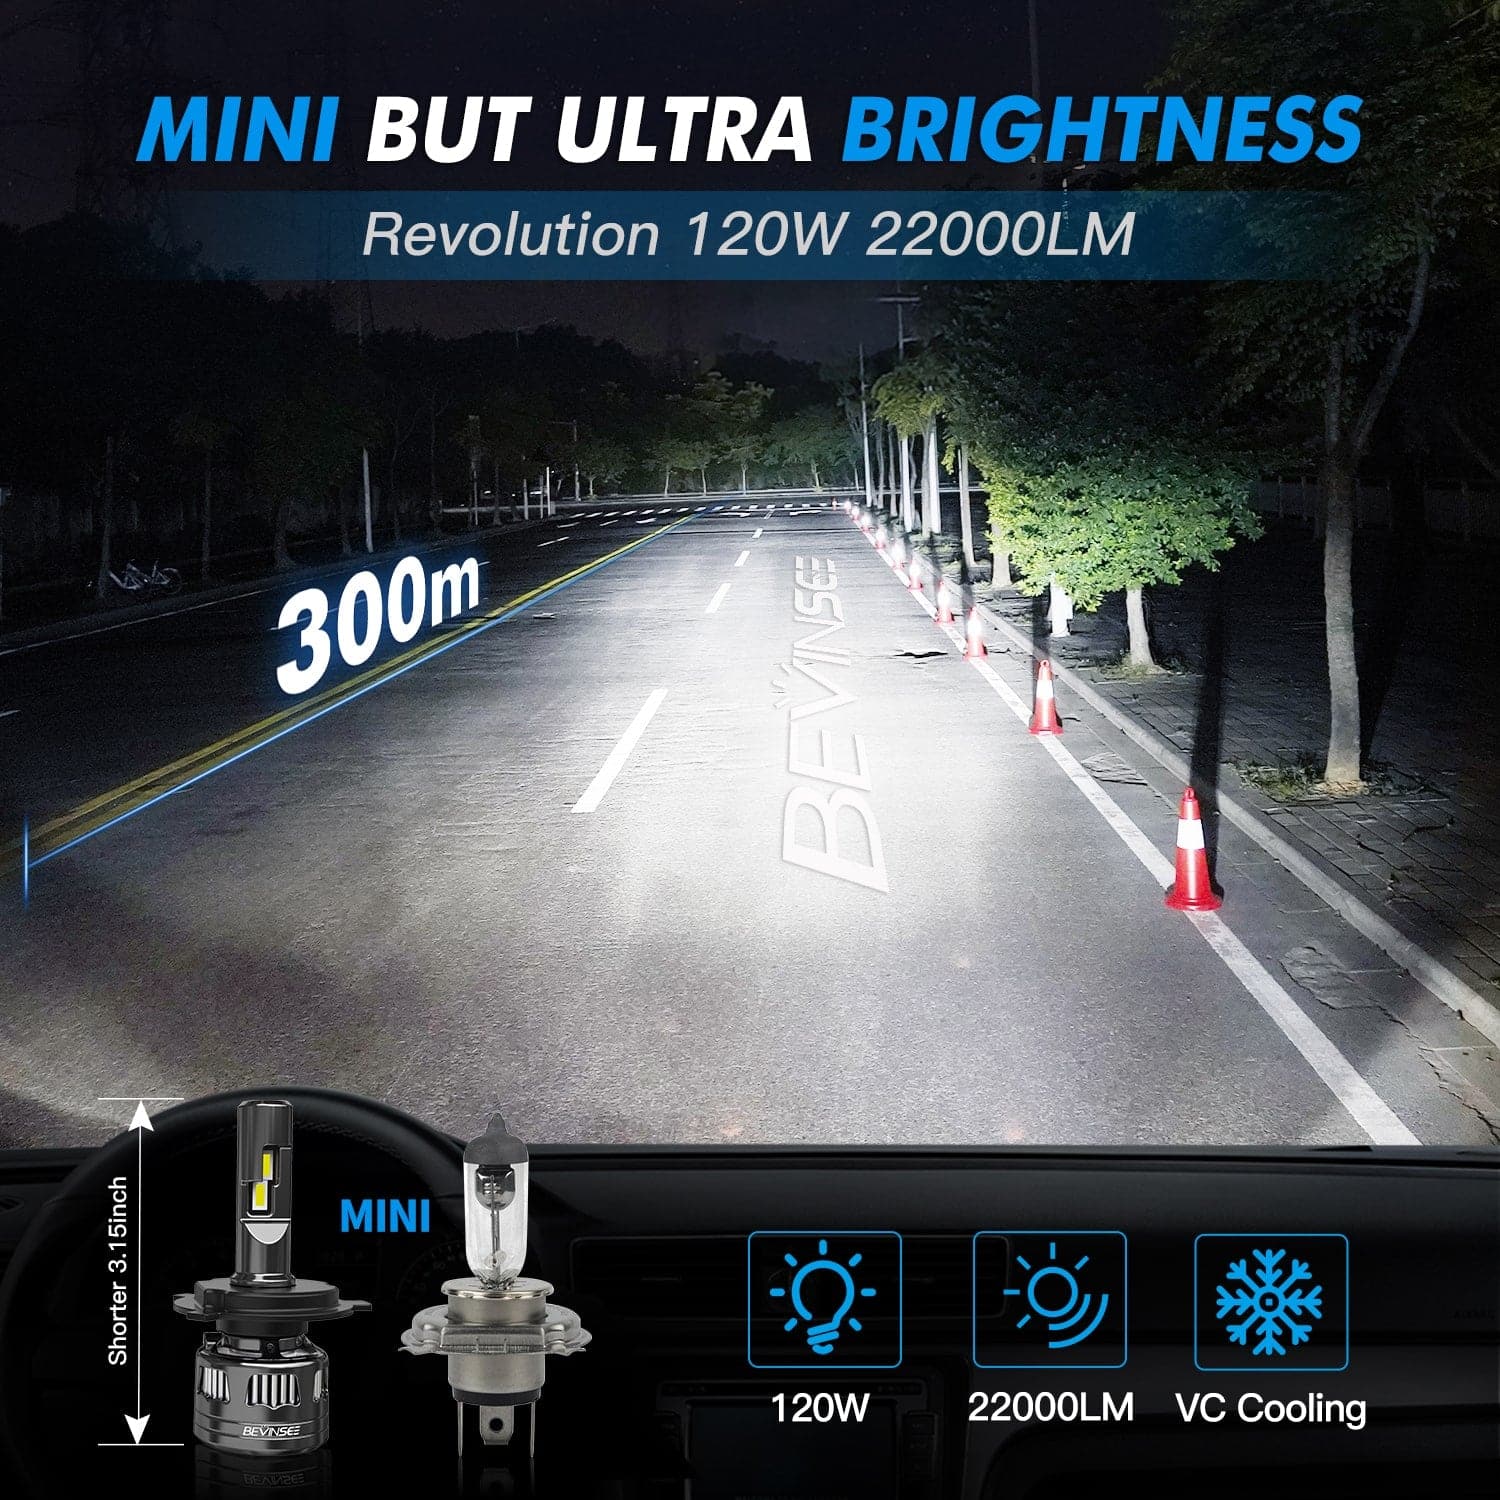 V45 9003 H4 LED Headlight Super Bright 6000K Bulbs